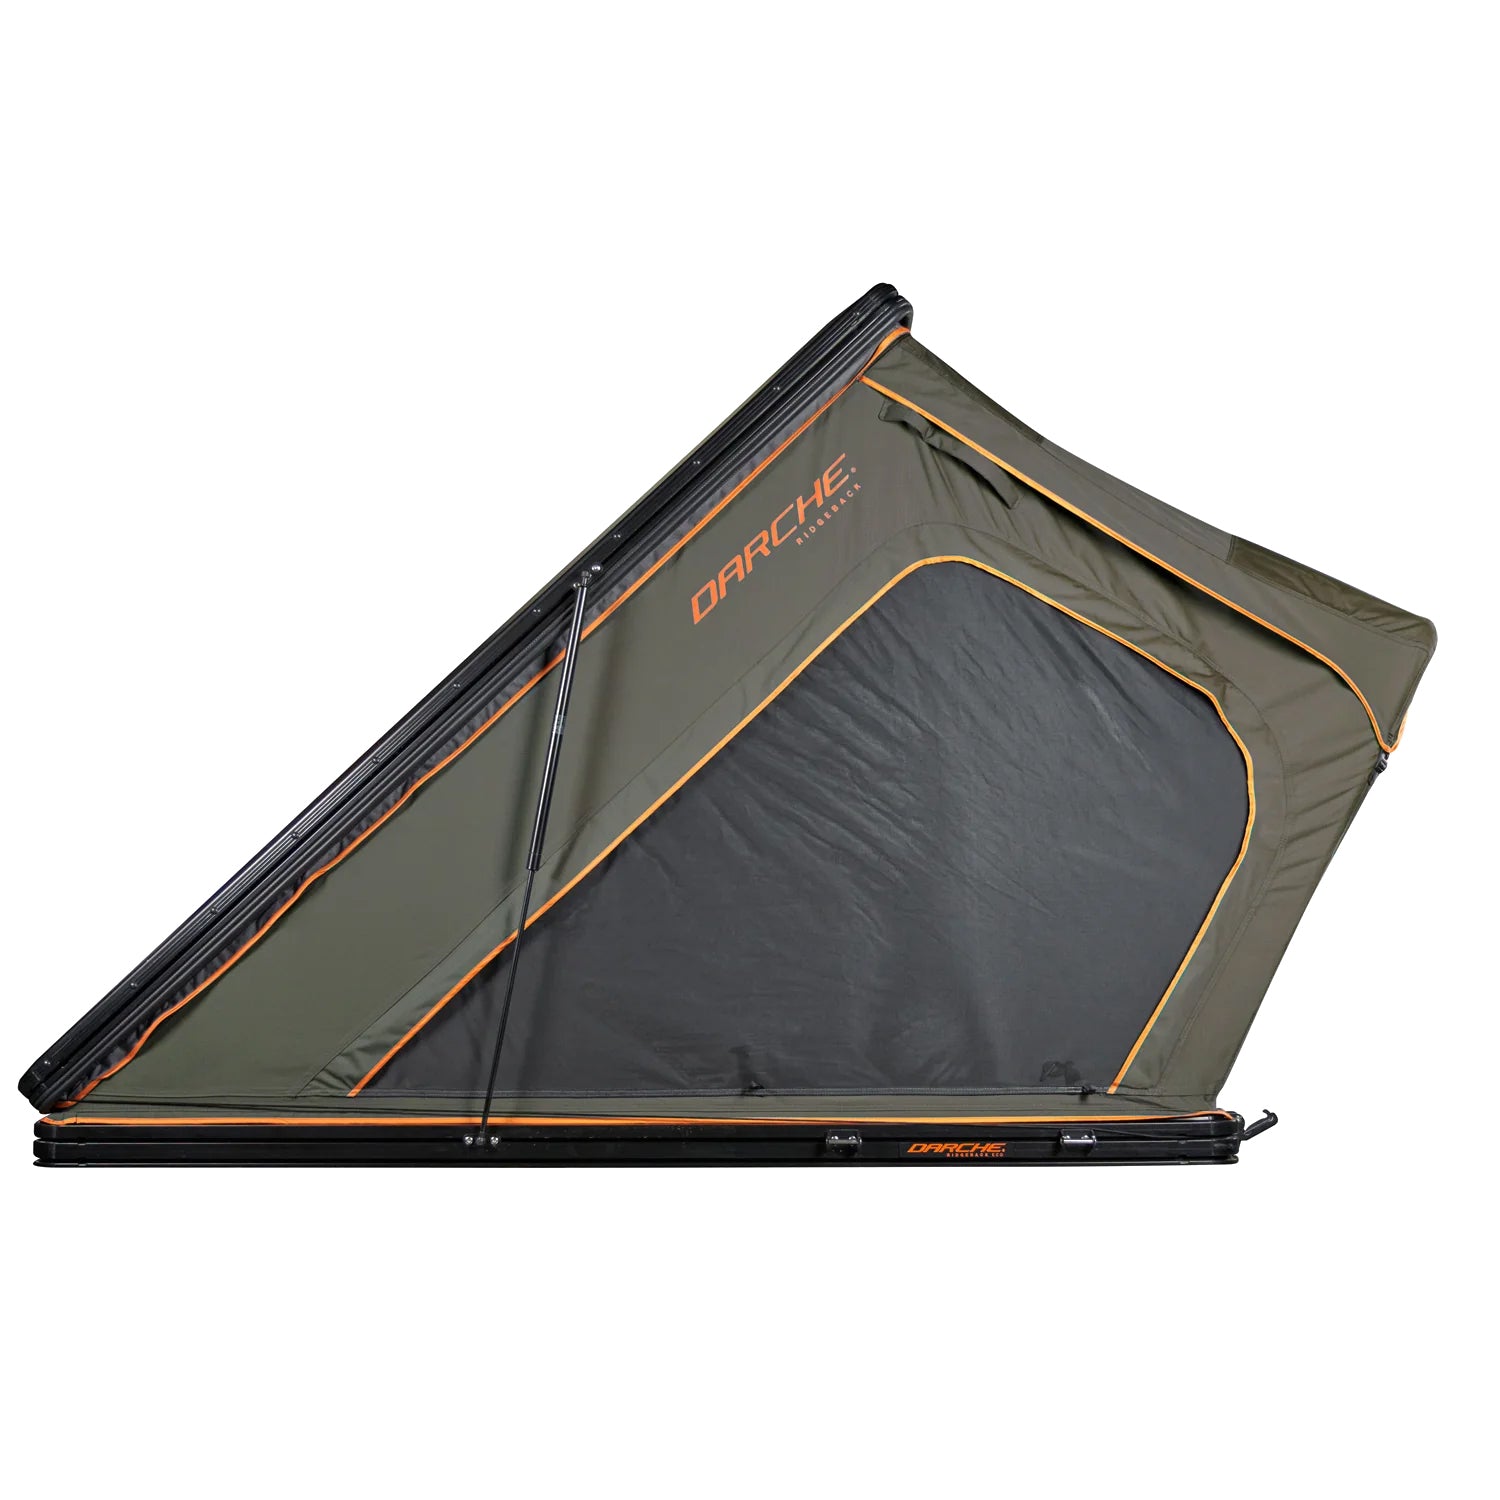 Darche Ridgeback Hard Shell Roof Top Tent - Darche - T050801554T